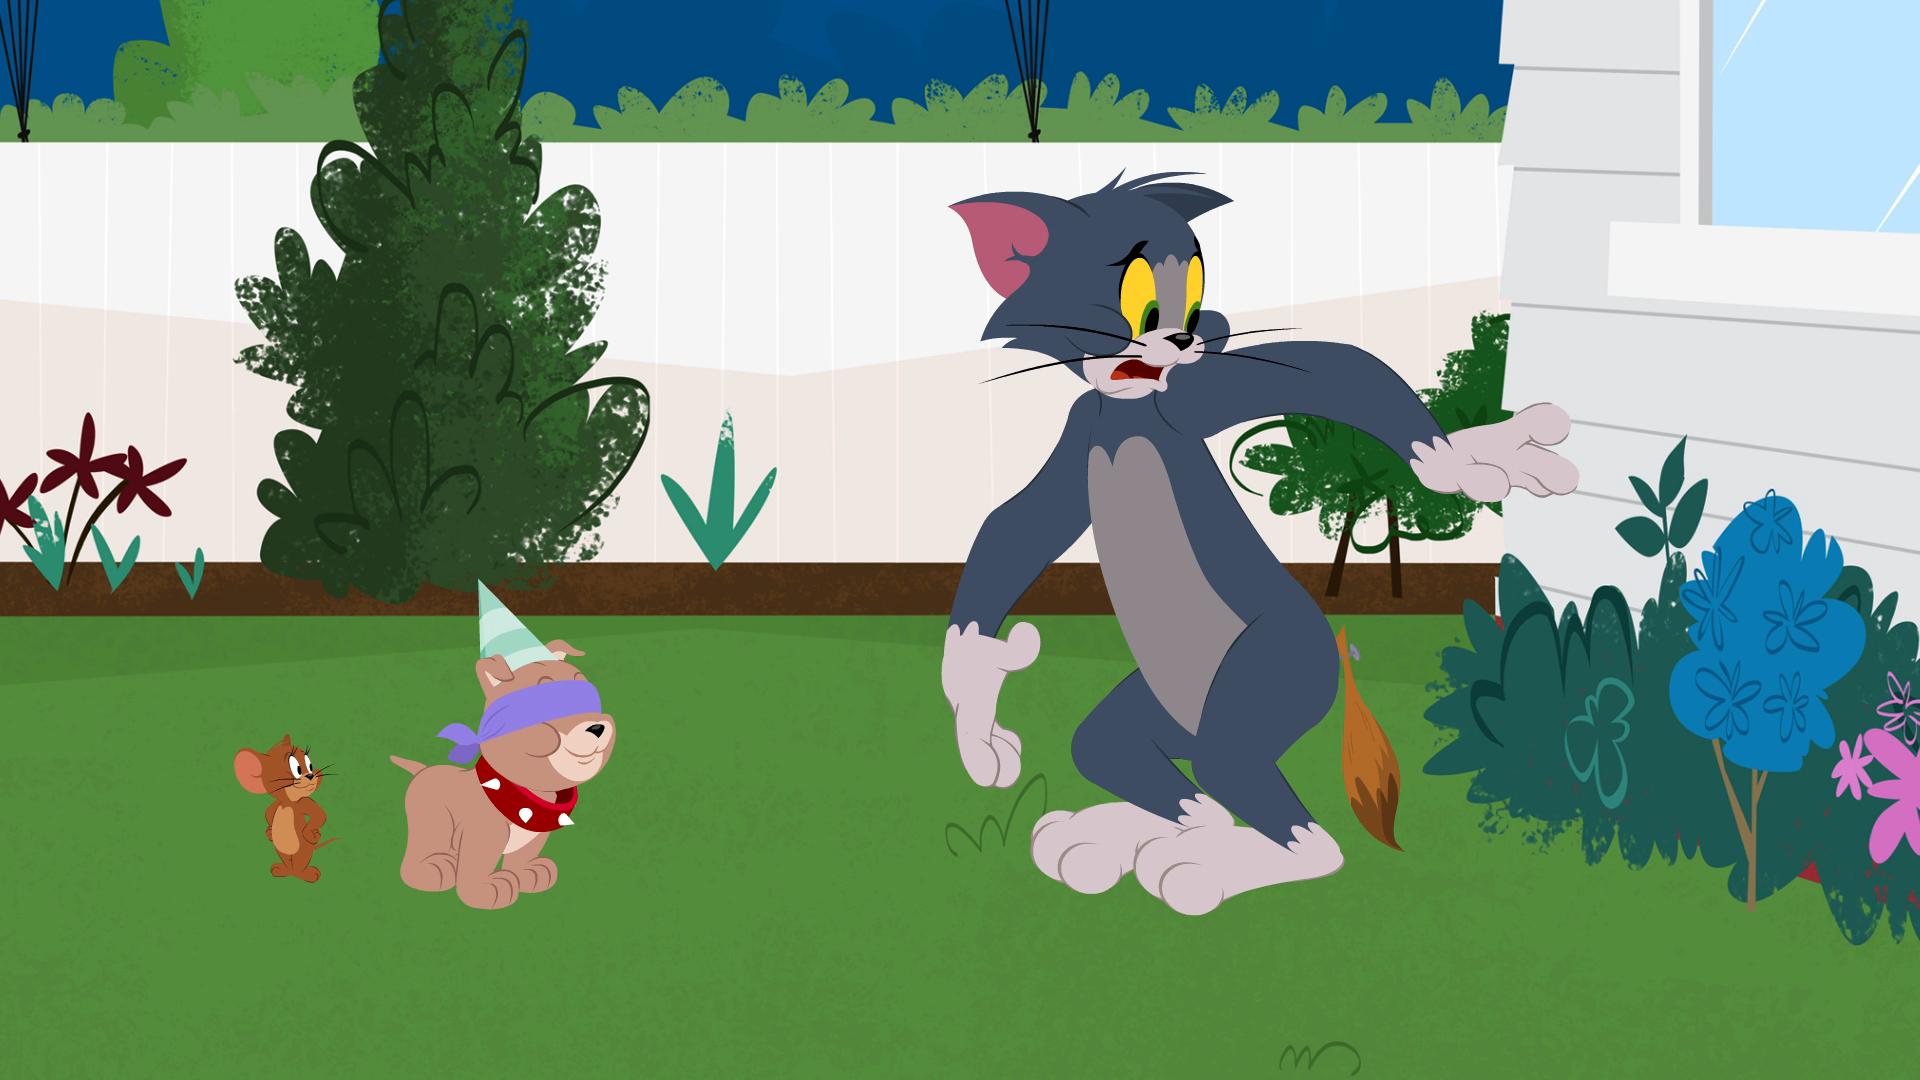 Tom jerry 2. Tom and Jerry show. Шоу Тома и Джерри том. Том и Джерри шоу 2014.